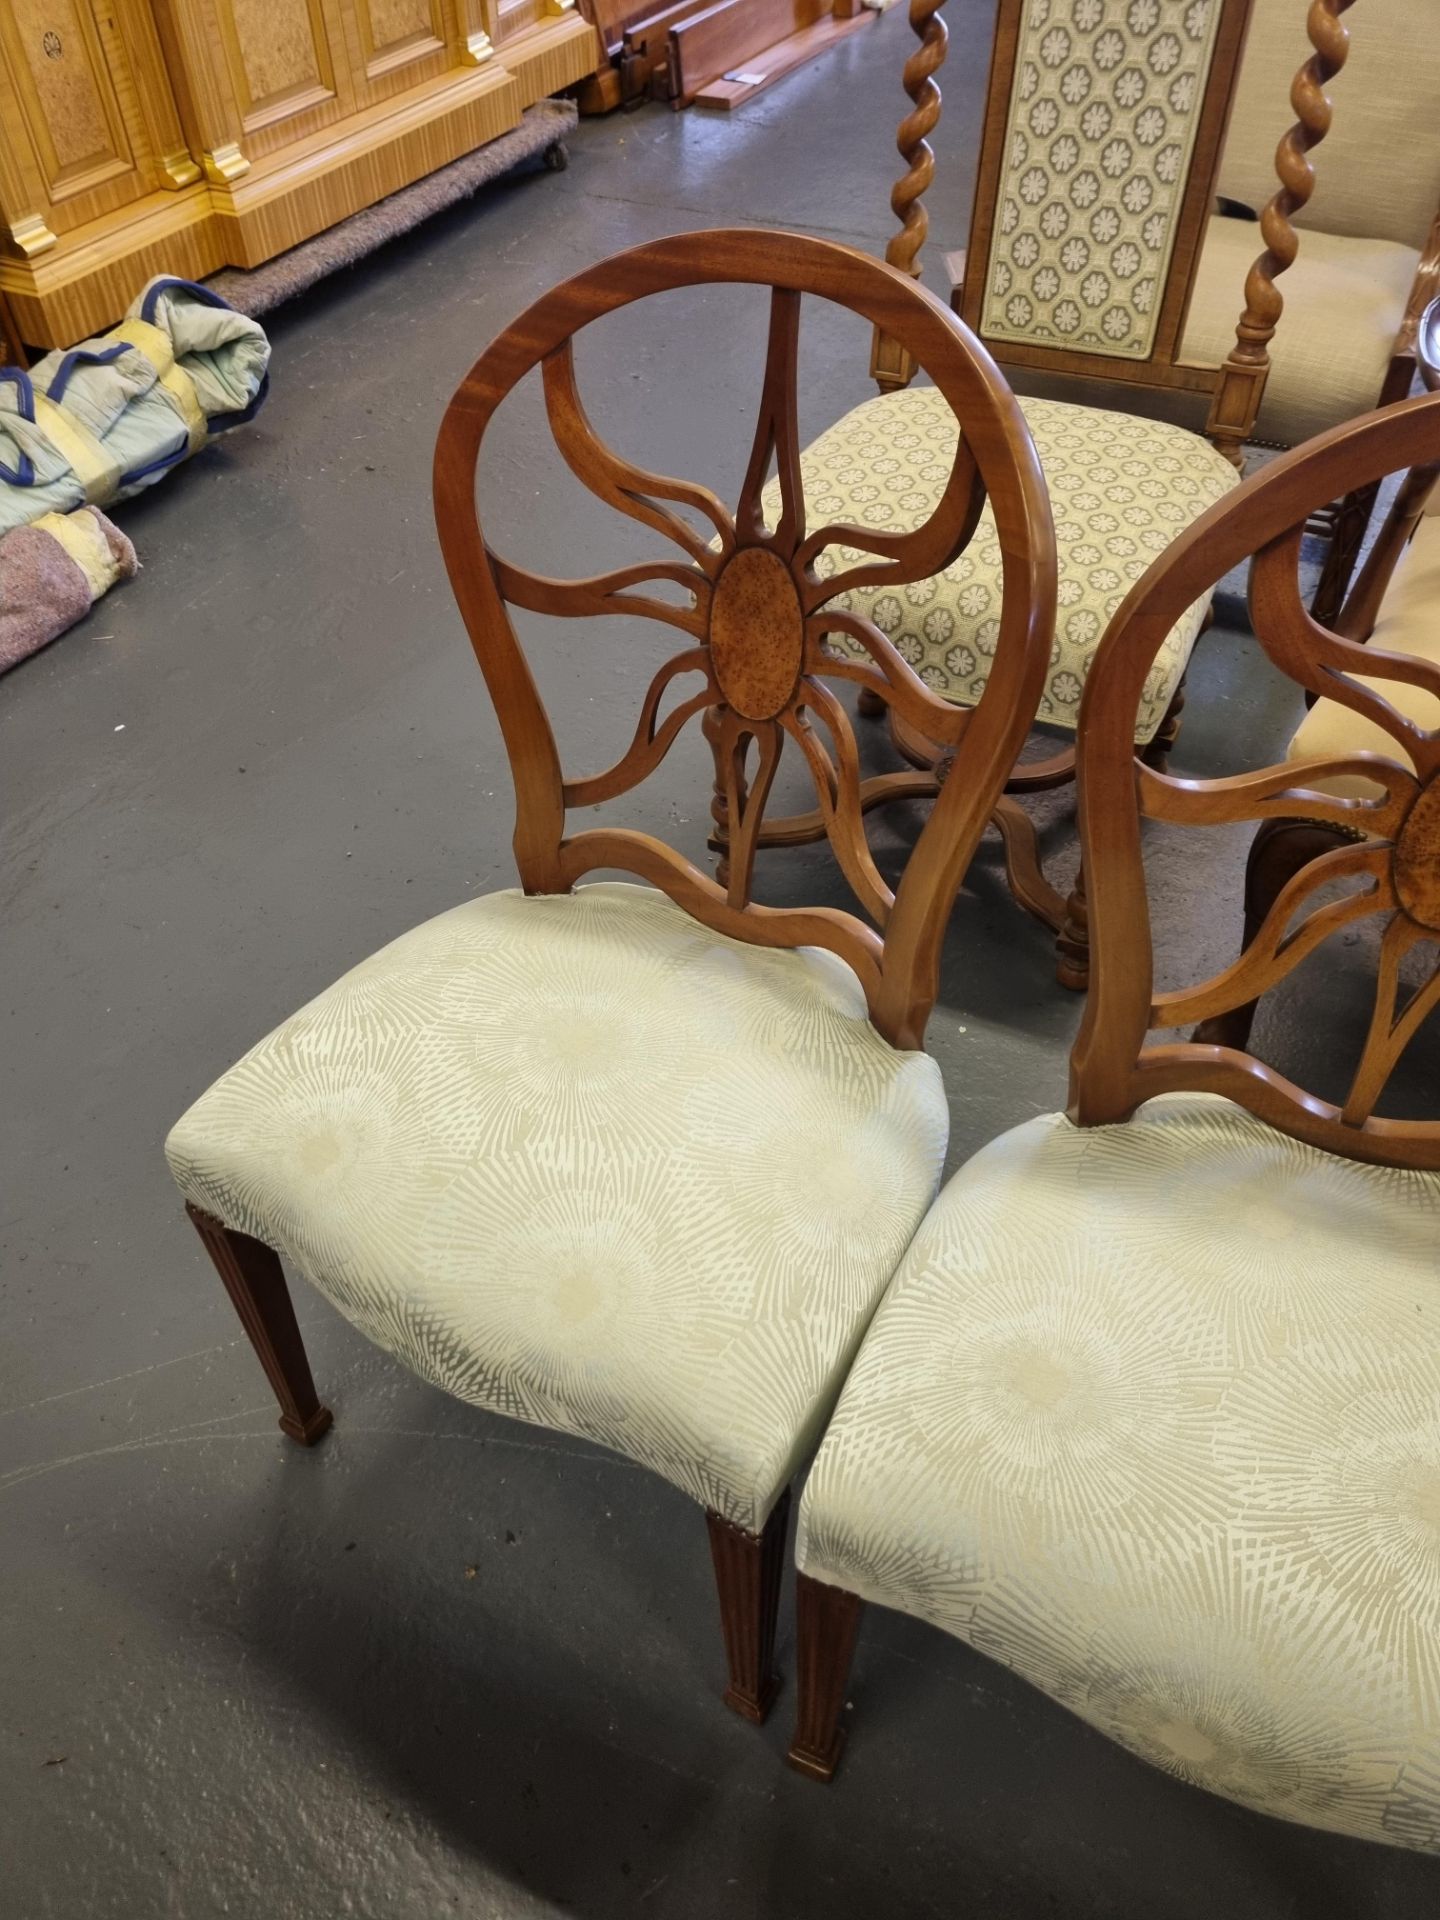 3 X Arthur Brett Mahogany Sunburst Chairs With Bespoke Green Silk Patterned Upholstery George III